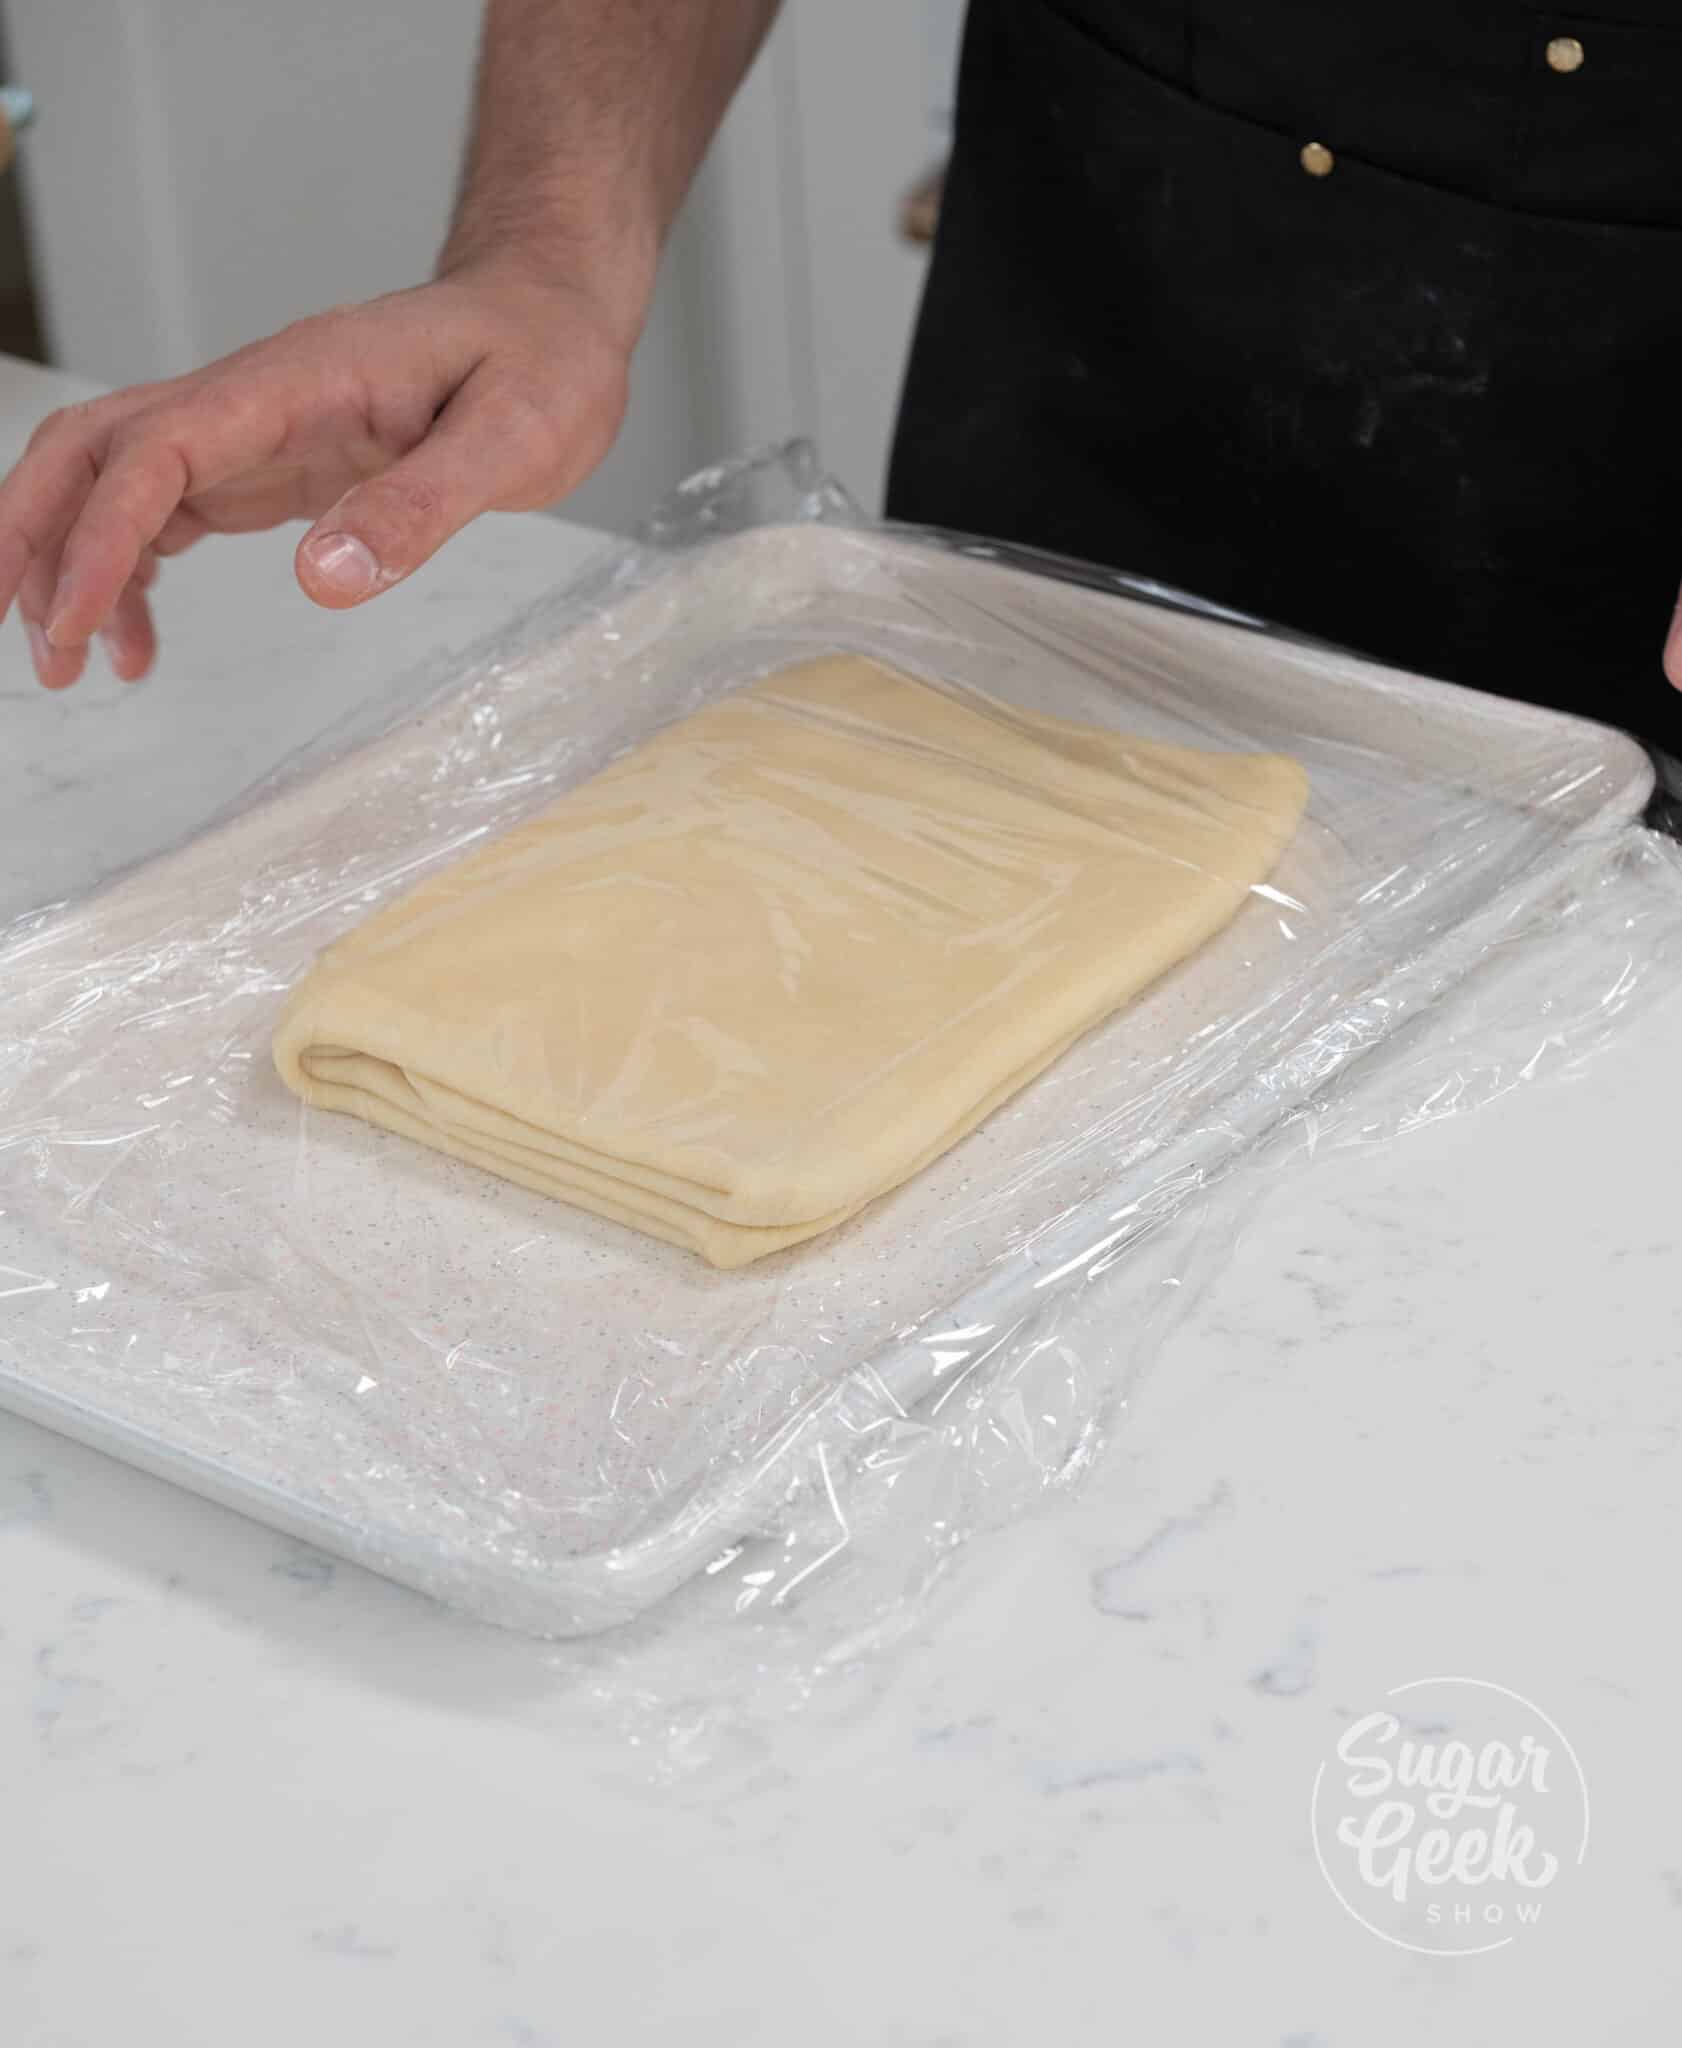 dough resting on baking sheet.